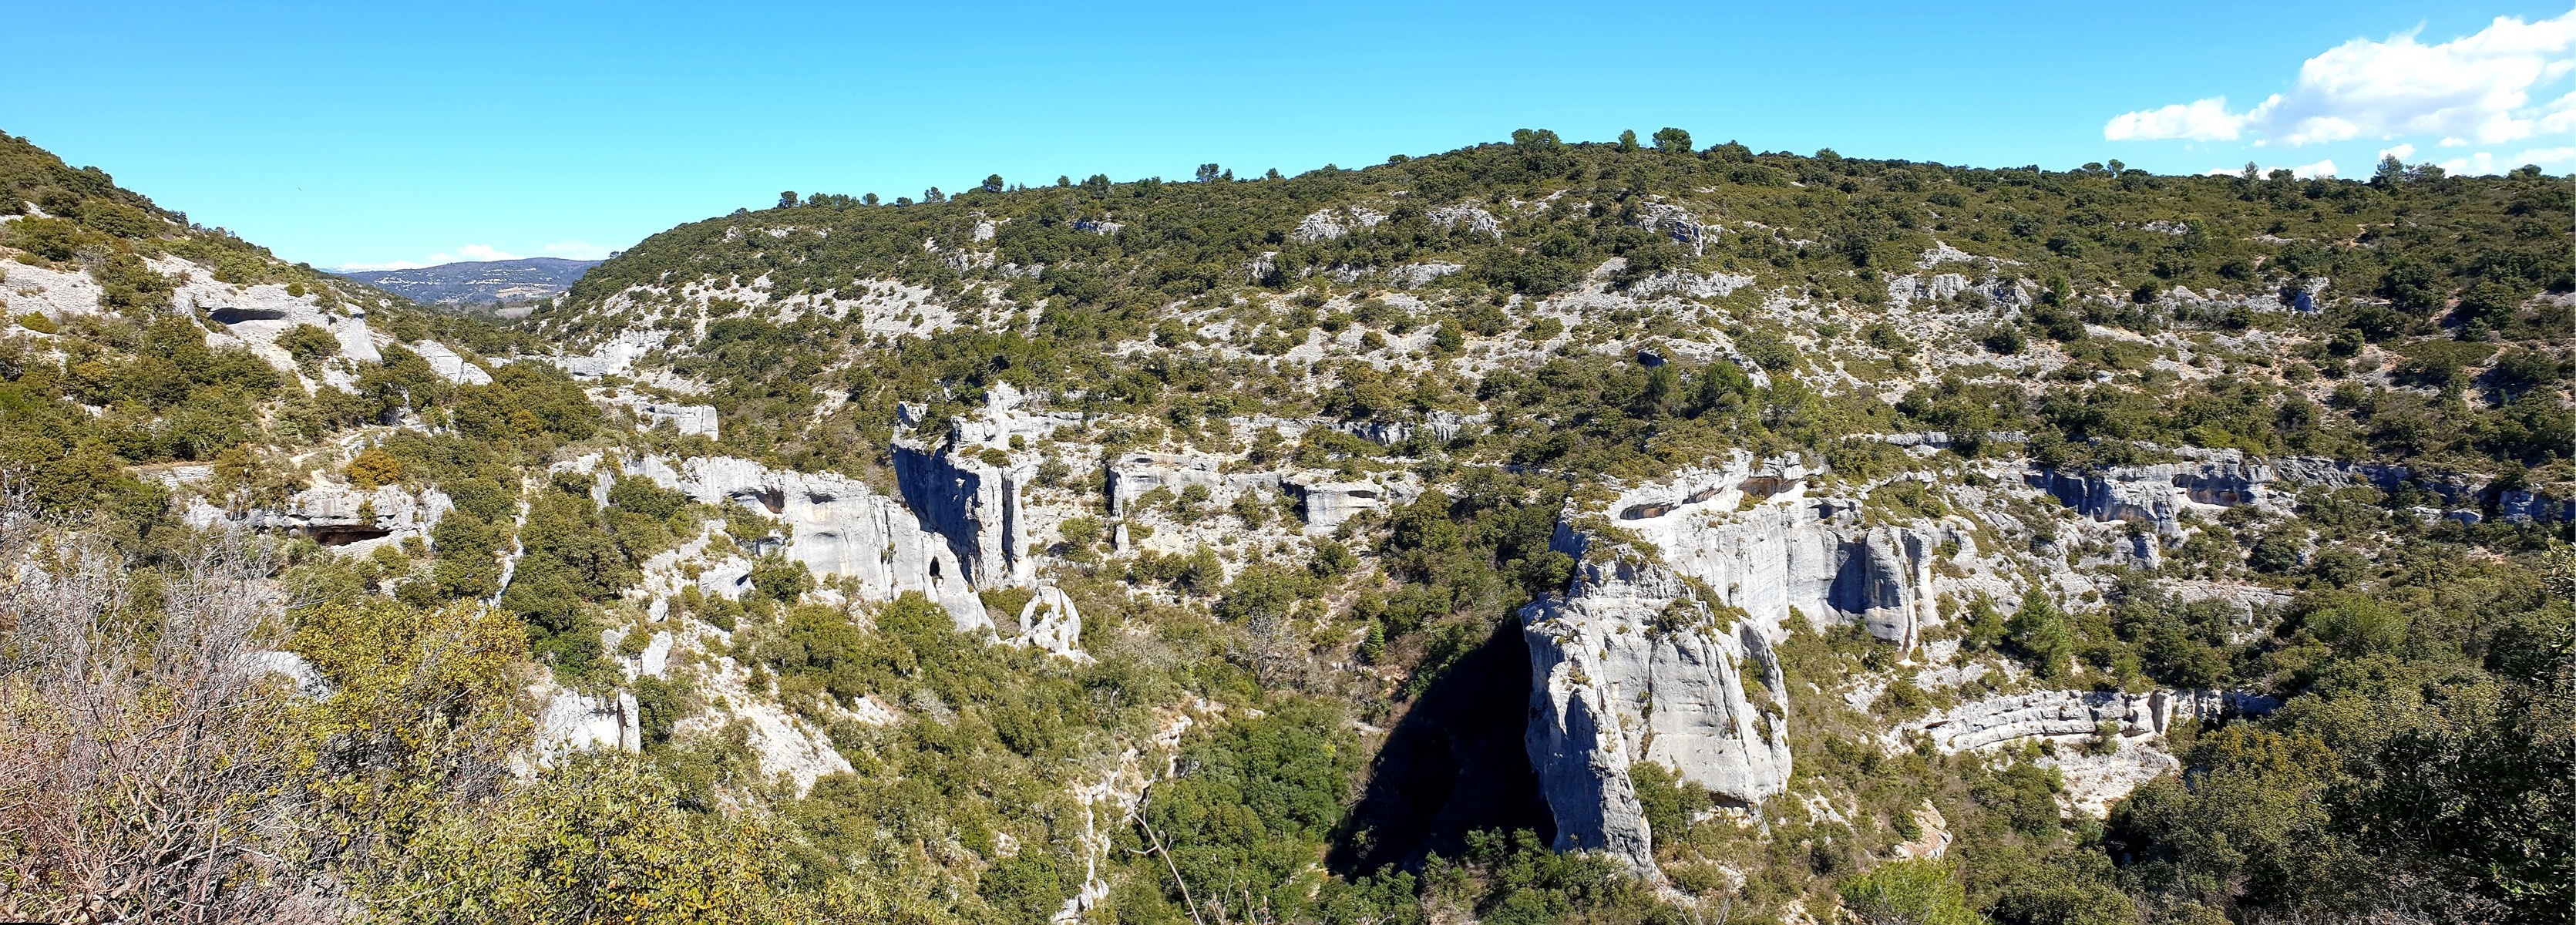 Luberon Regional Nature Park, Hiking trails, Travels, 3350x1200 Dual Screen Desktop